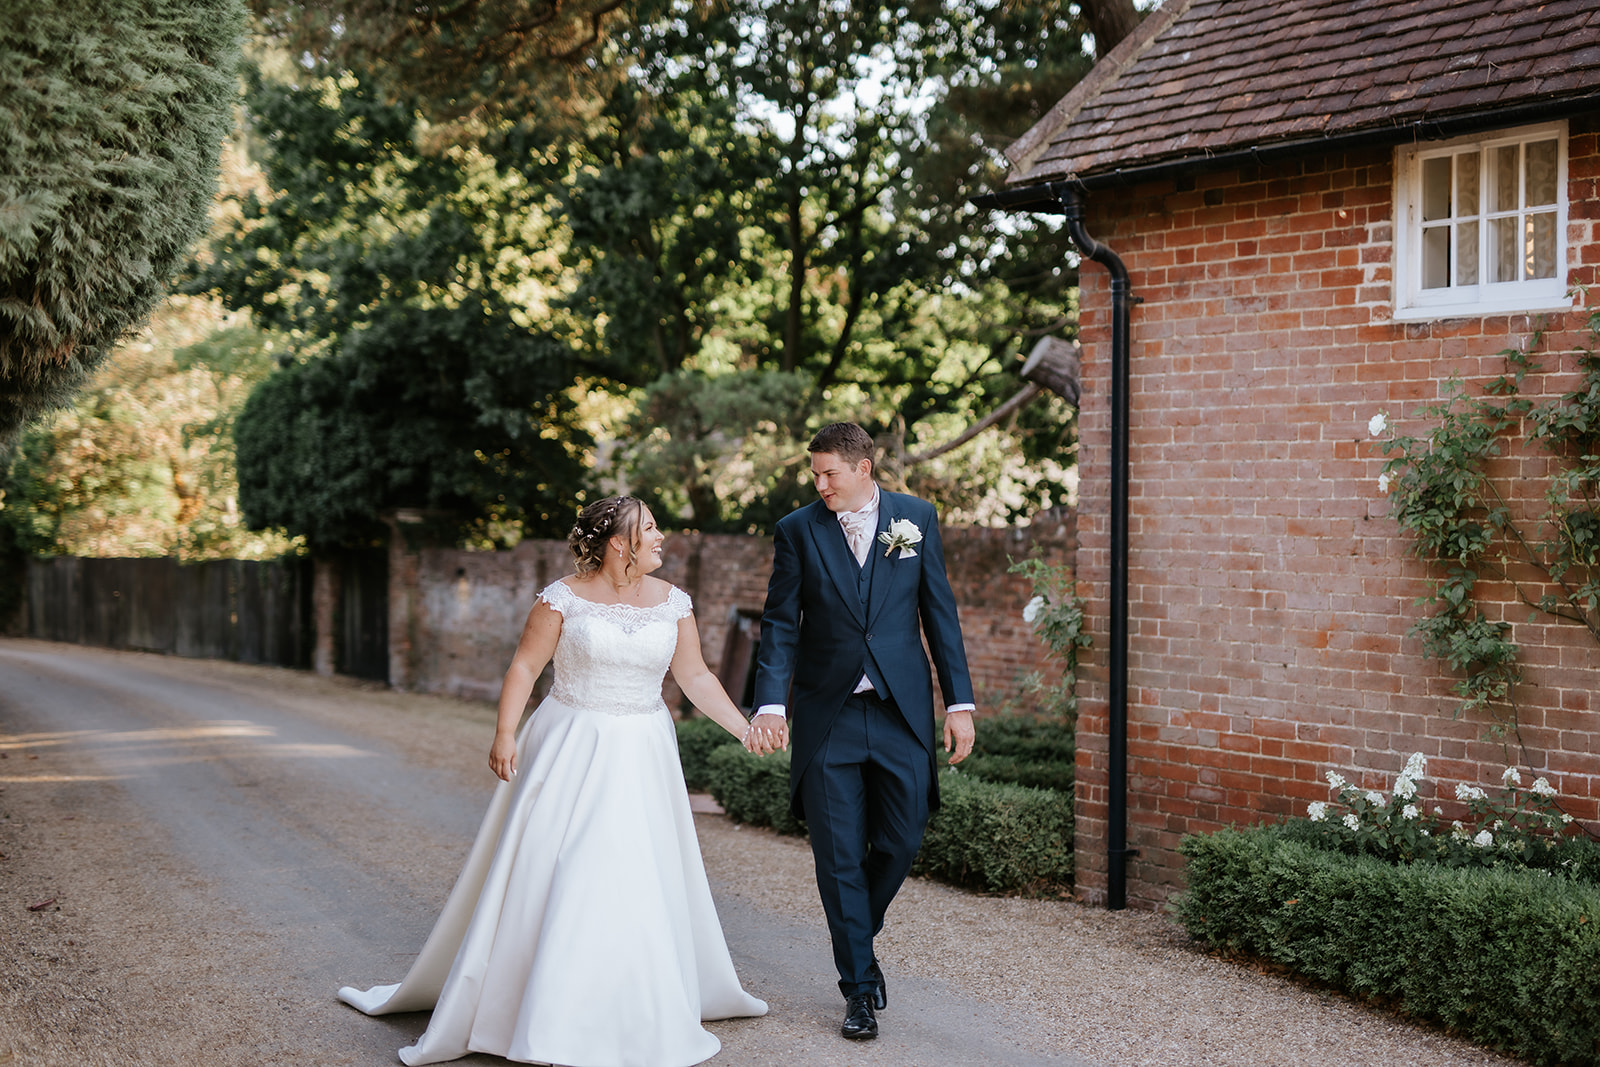 Married couple walking through Gaynes Park wedding venue in Essex